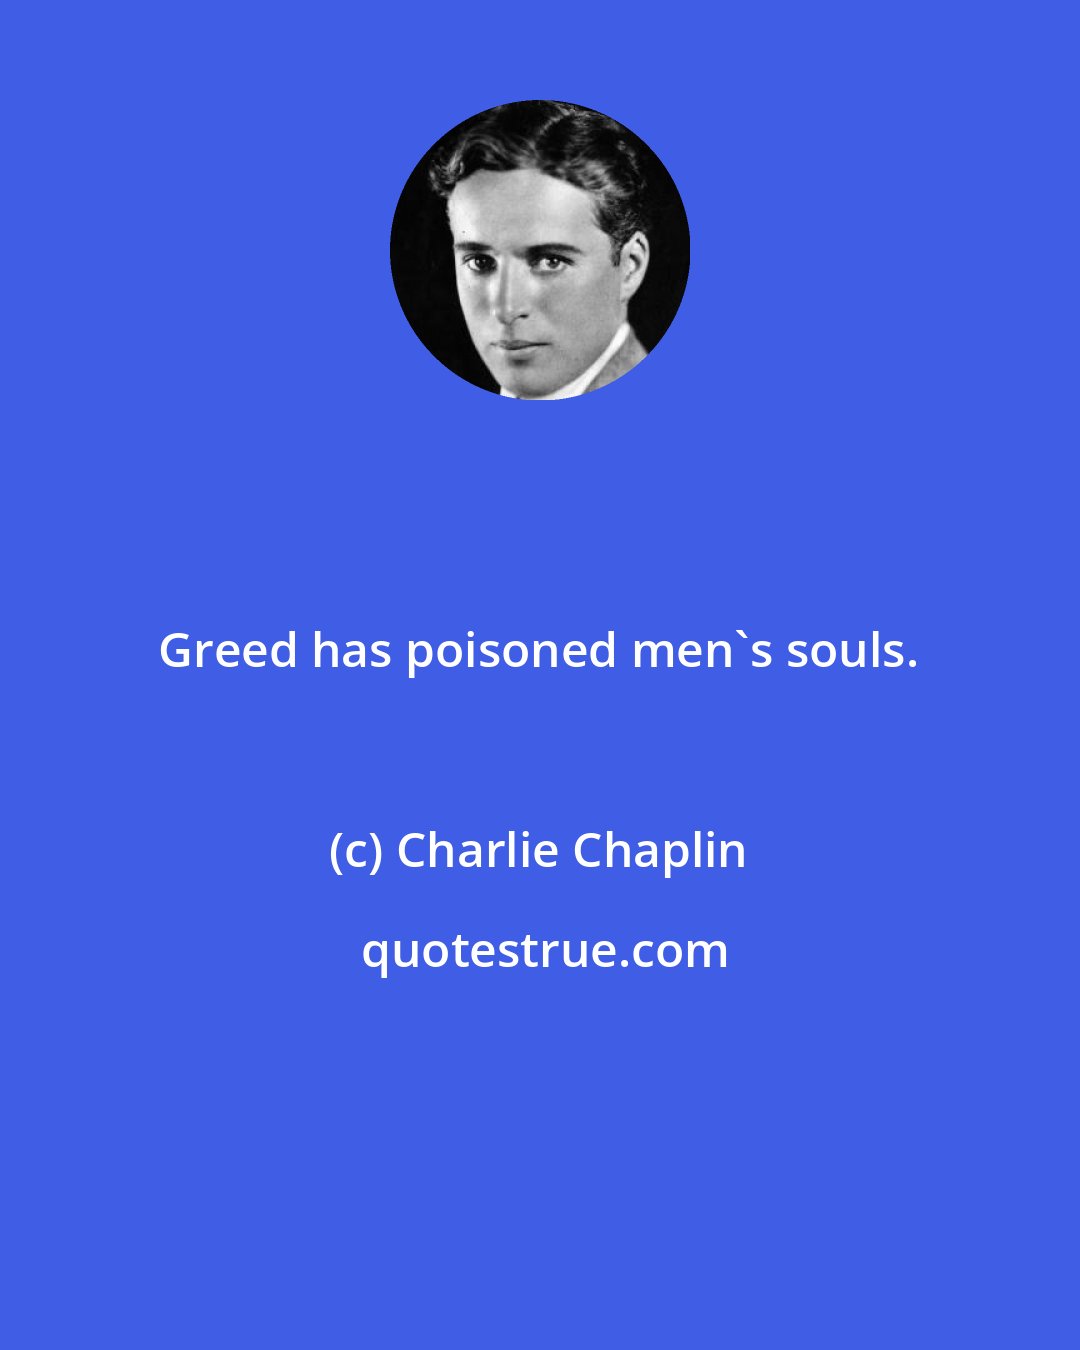 Charlie Chaplin: Greed has poisoned men's souls.